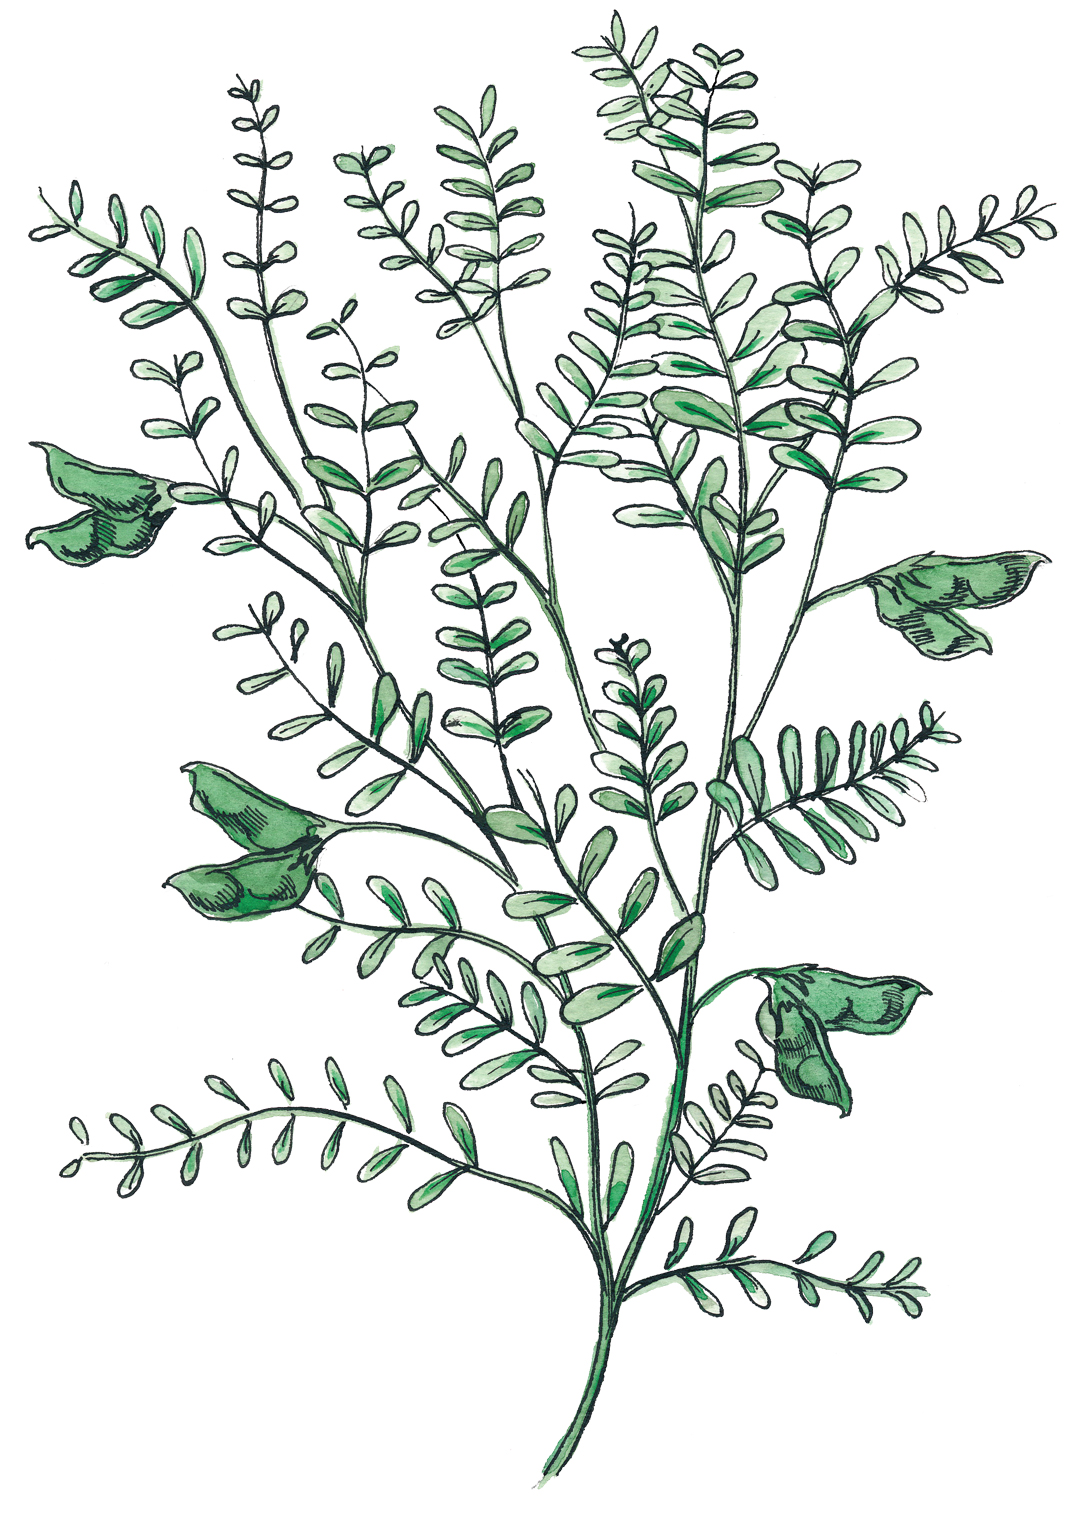 lentil plant illustration